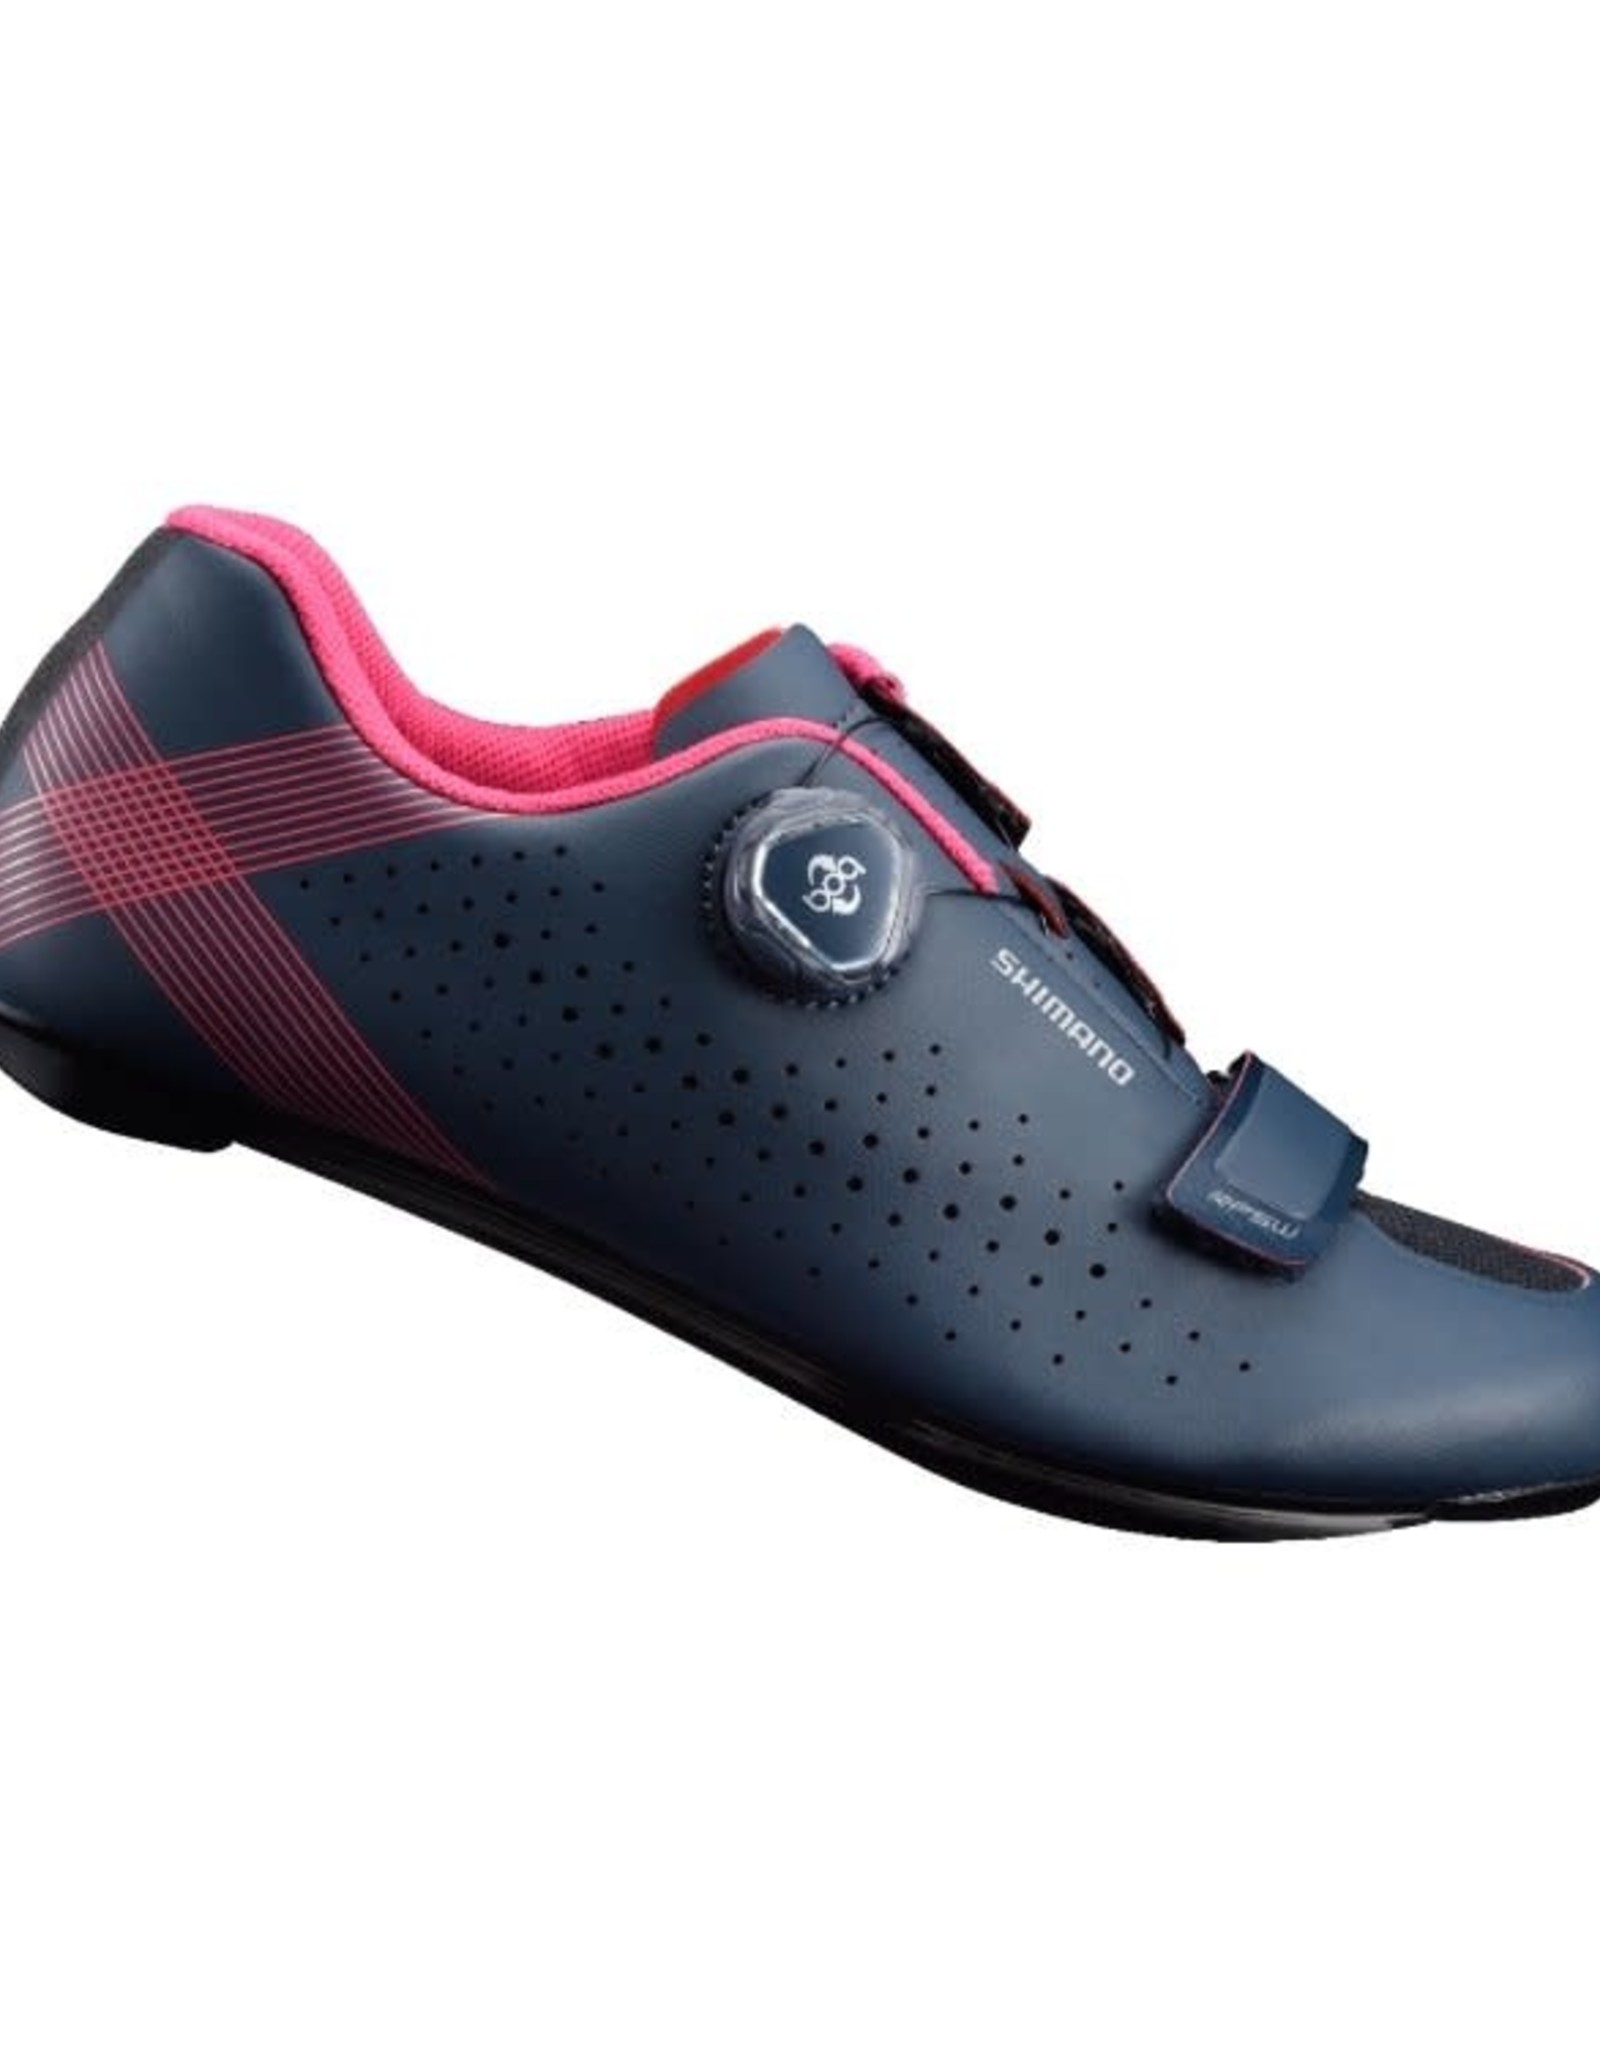 Shimano SH-RP5W Bicycle Shoes